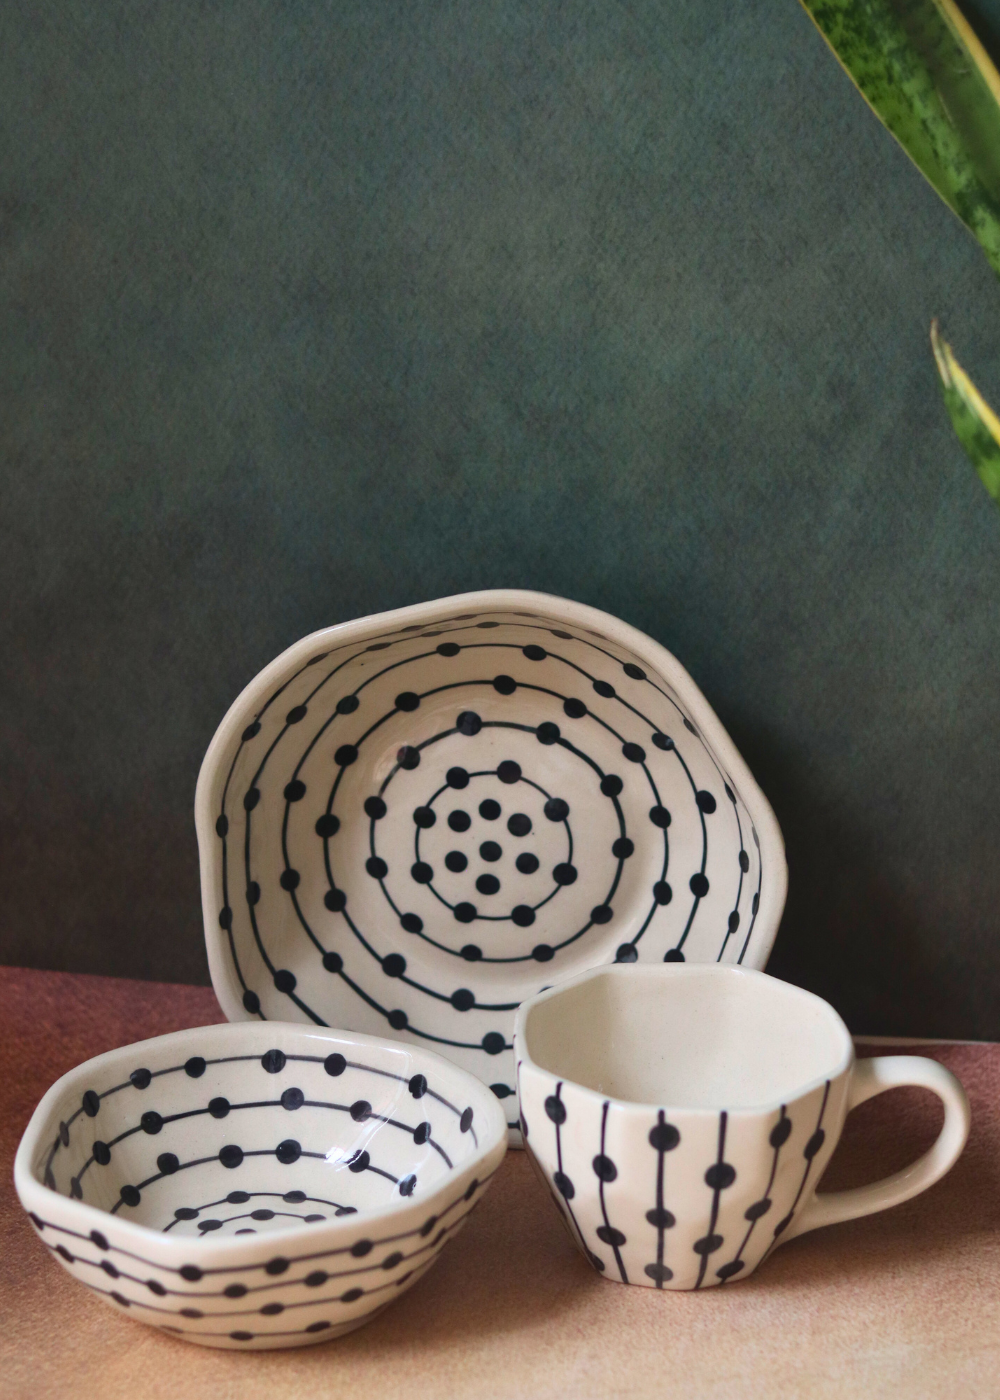 Stunning design breakfast bowls & coffee mug